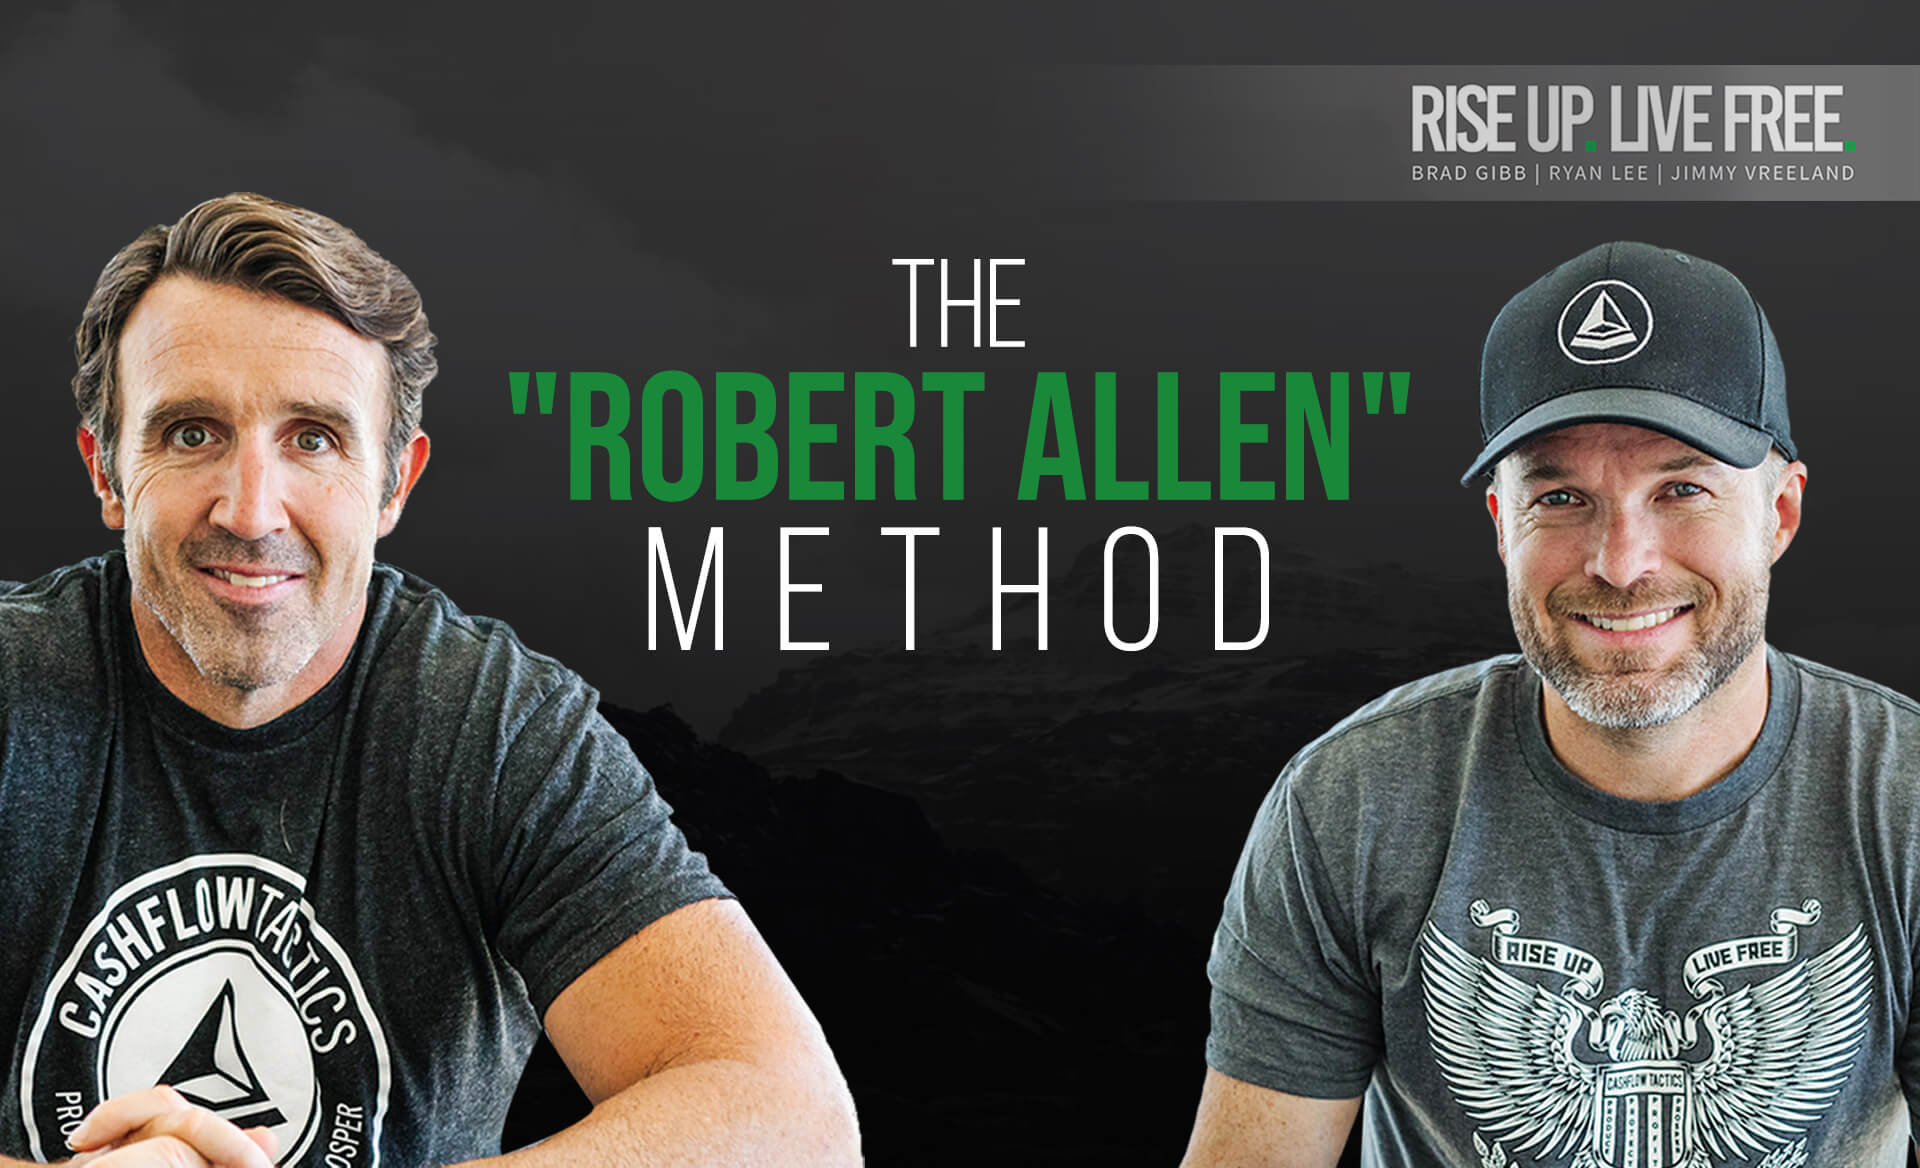 The "Robert Allen" Method to Achieve Financial Freedom